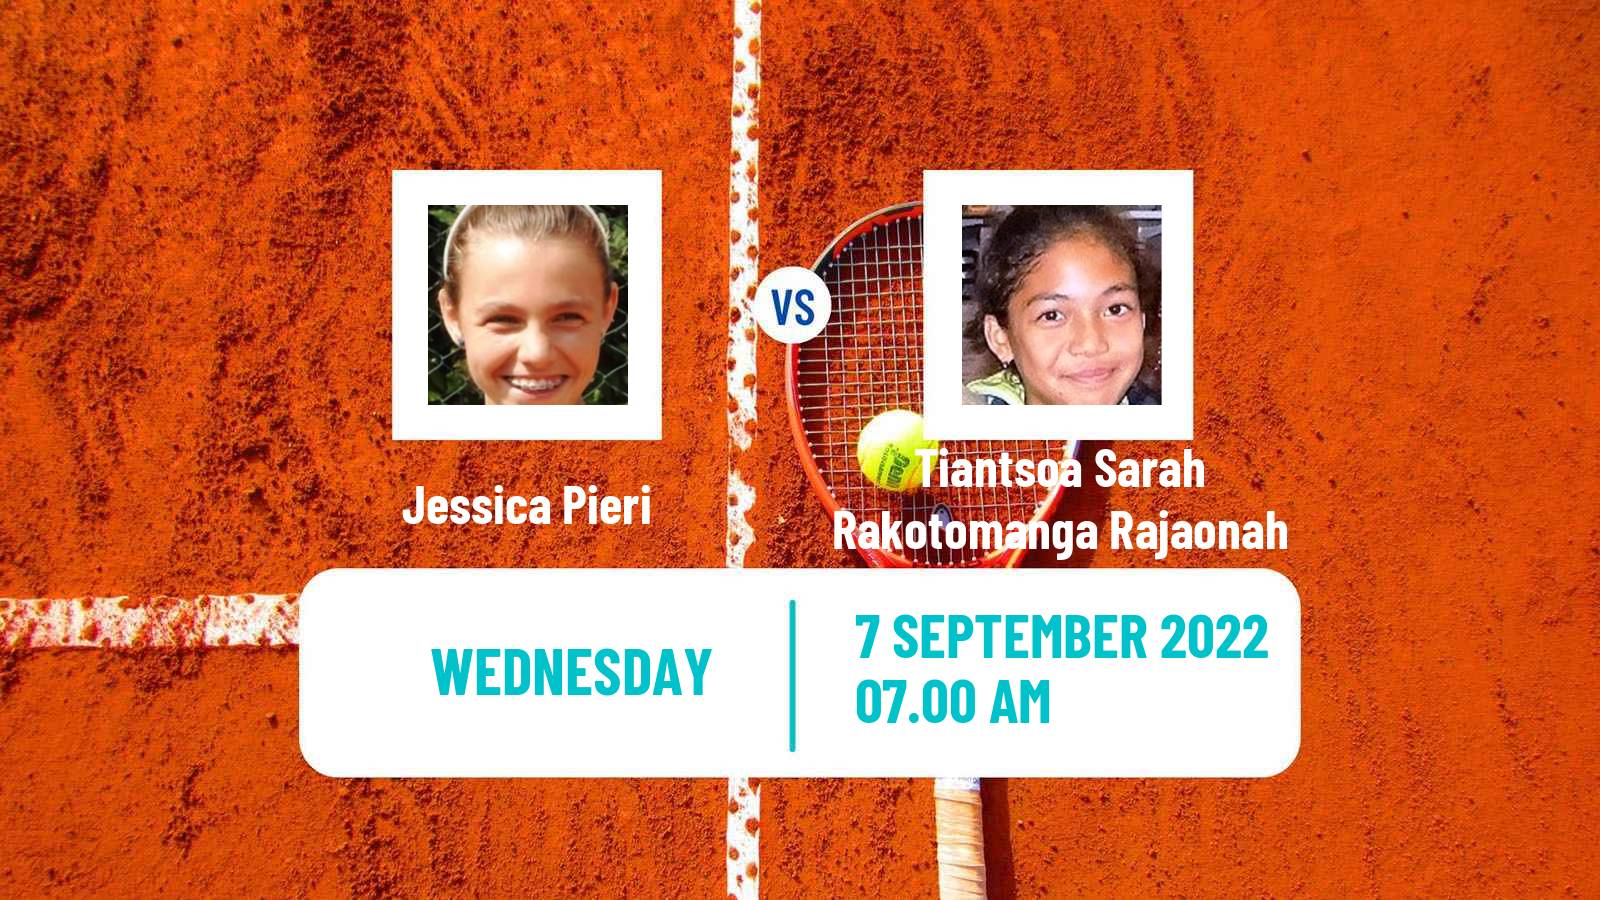 Tennis ITF Tournaments Jessica Pieri - Tiantsoa Sarah Rakotomanga Rajaonah